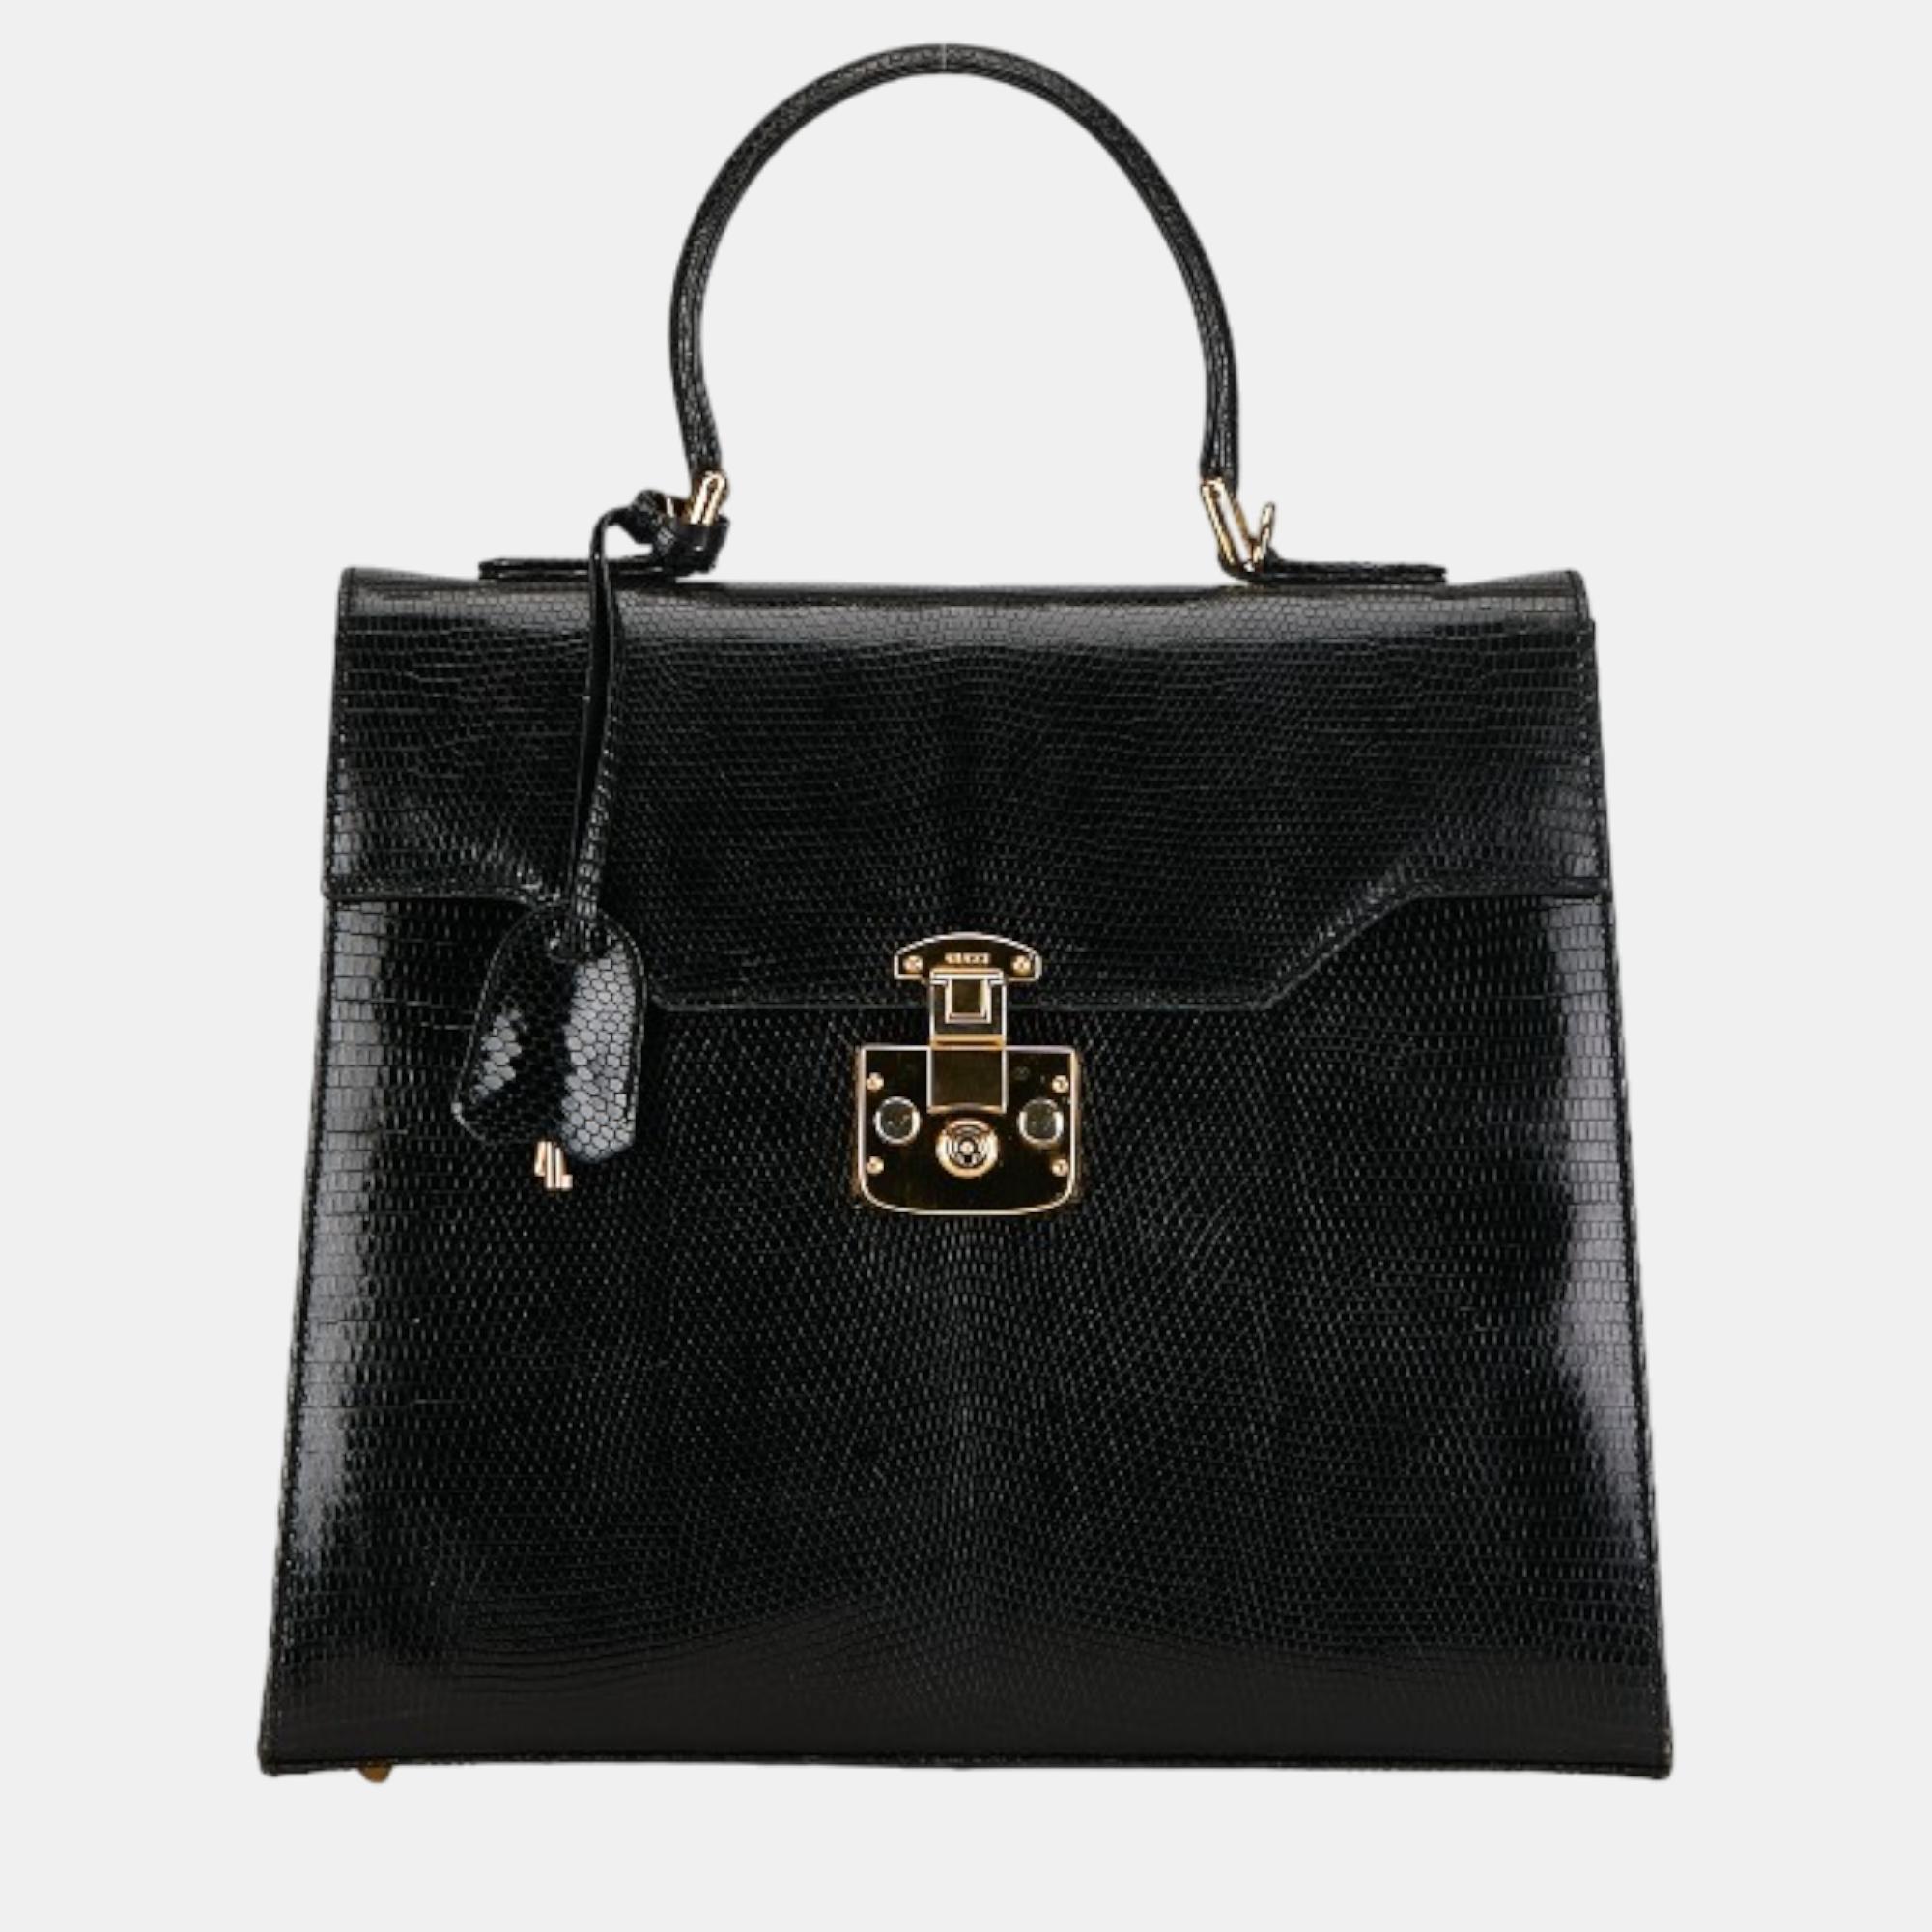 Gucci black leather lady lock handbag